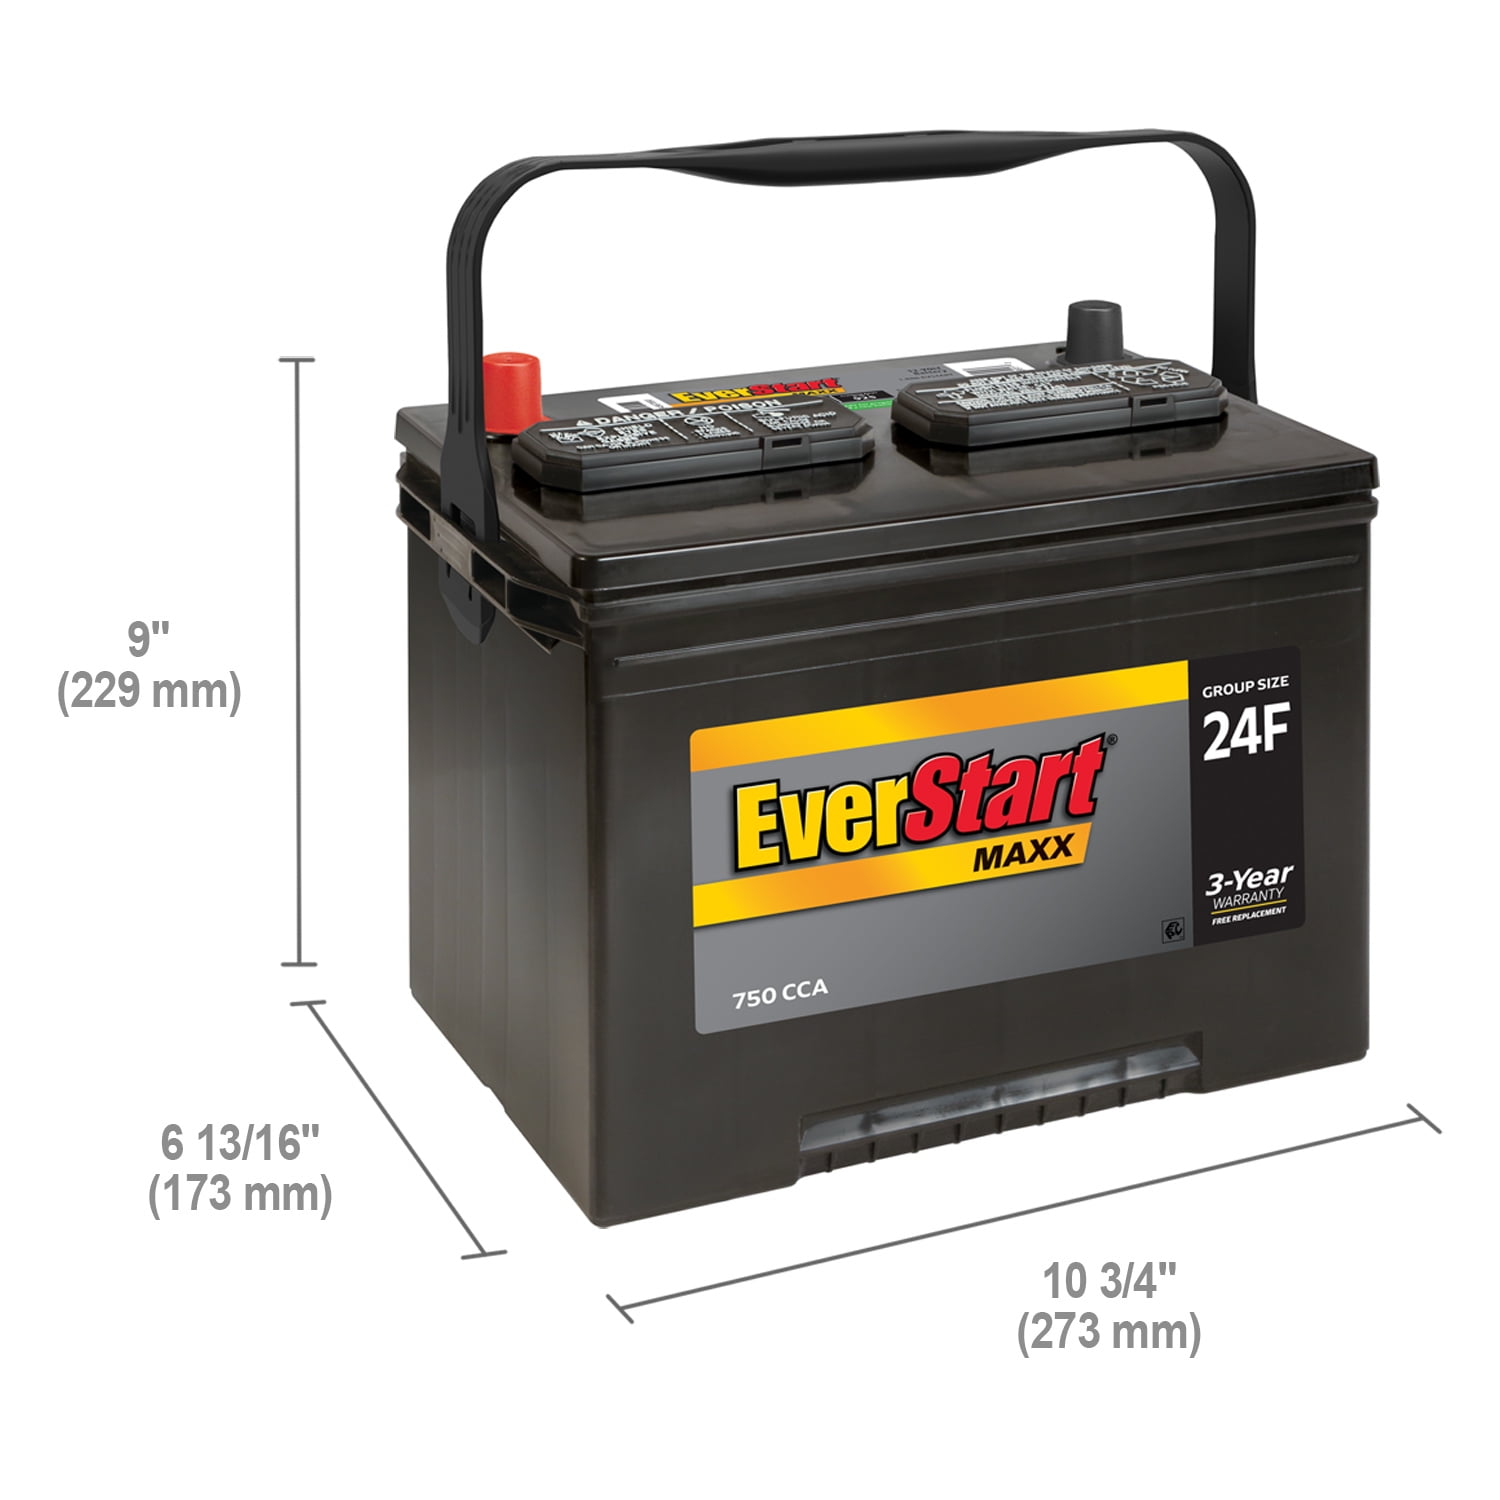 EverStart Maxx Lead Acid Automotive Battery, Group Size 24F 12 Volt, 750  CCA 